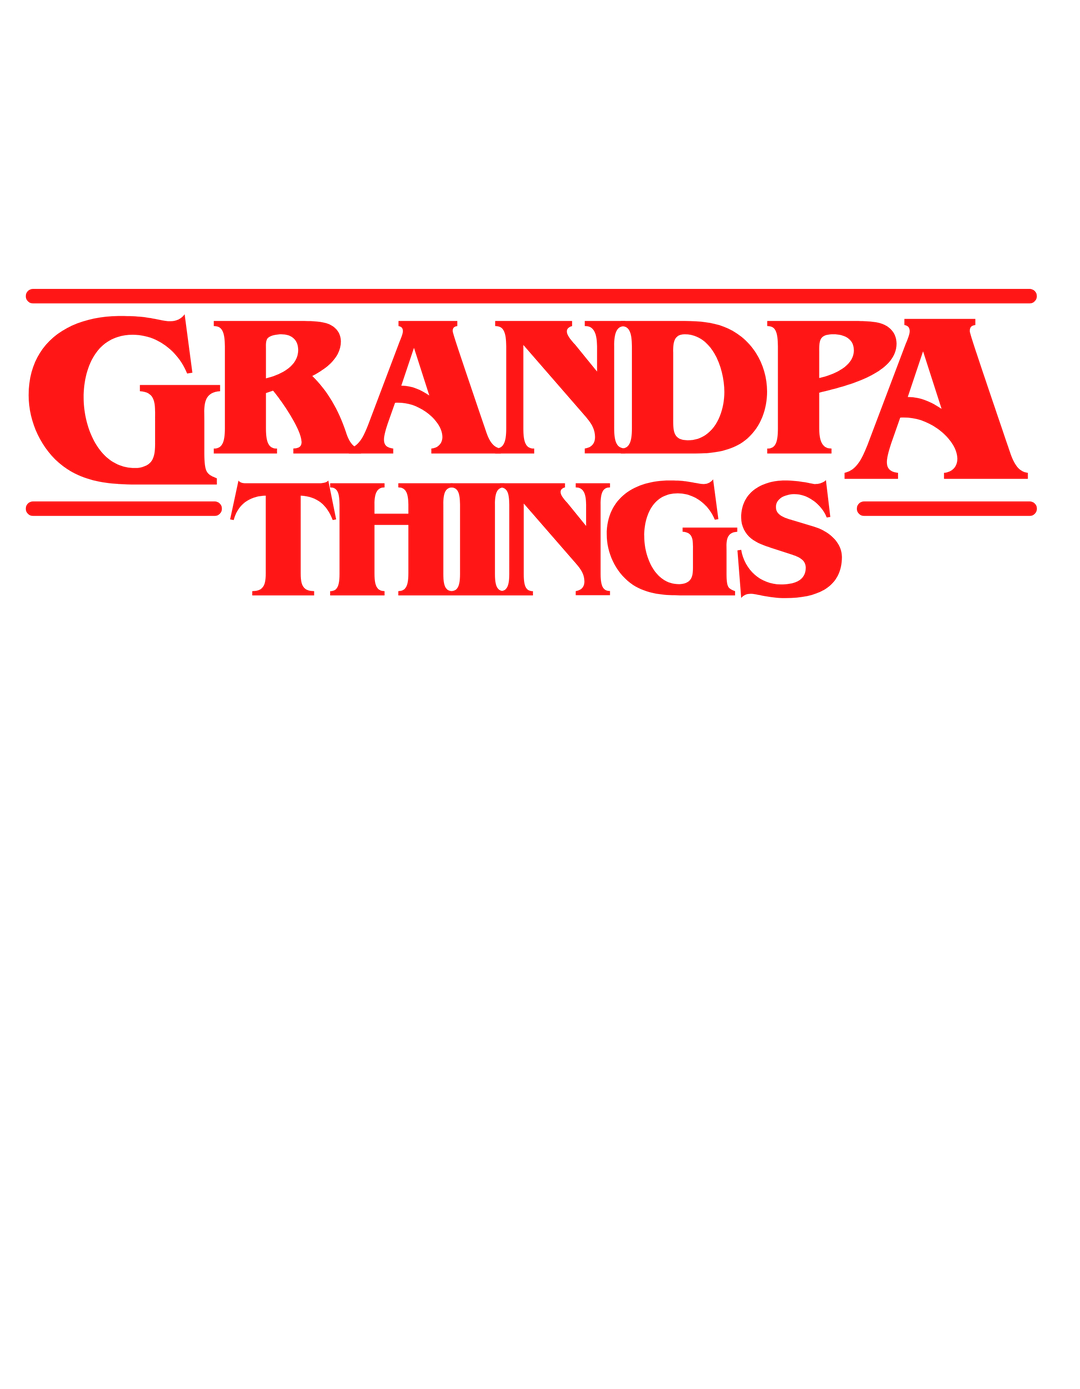 GRANDPA THINGS